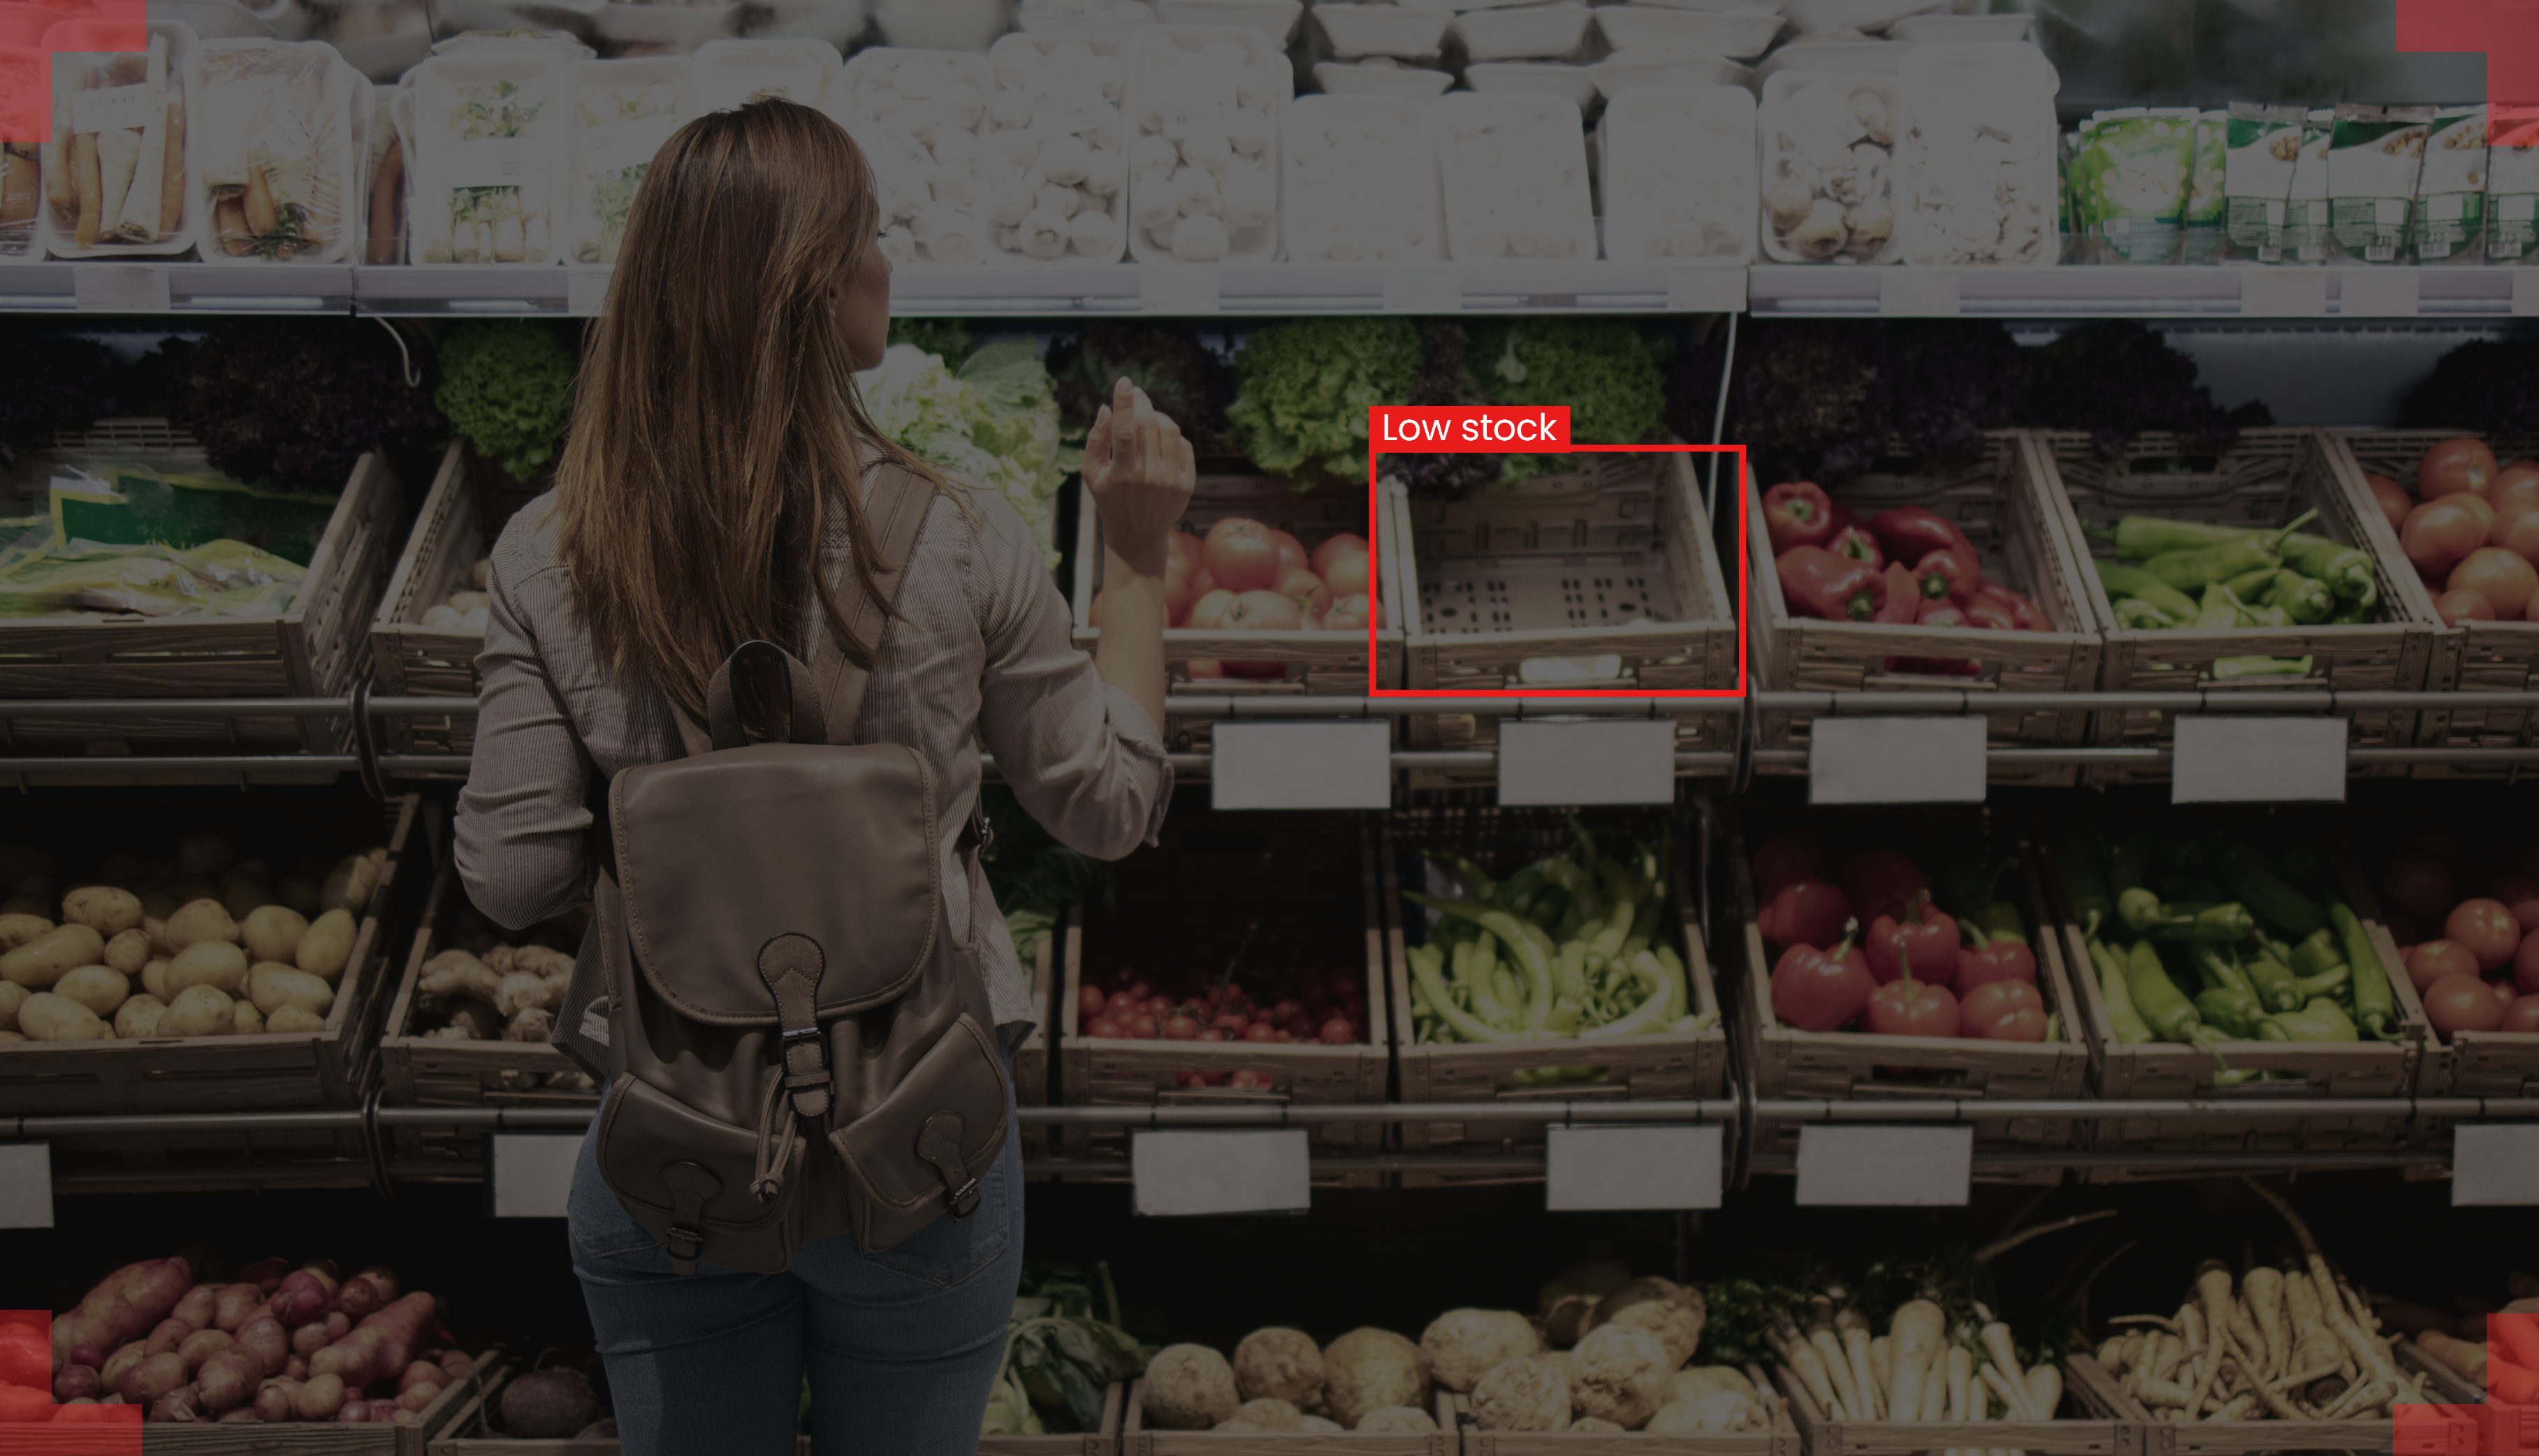 Computer Vision for Retail Shelf Monitoring Optimizing On-Shelf Availability